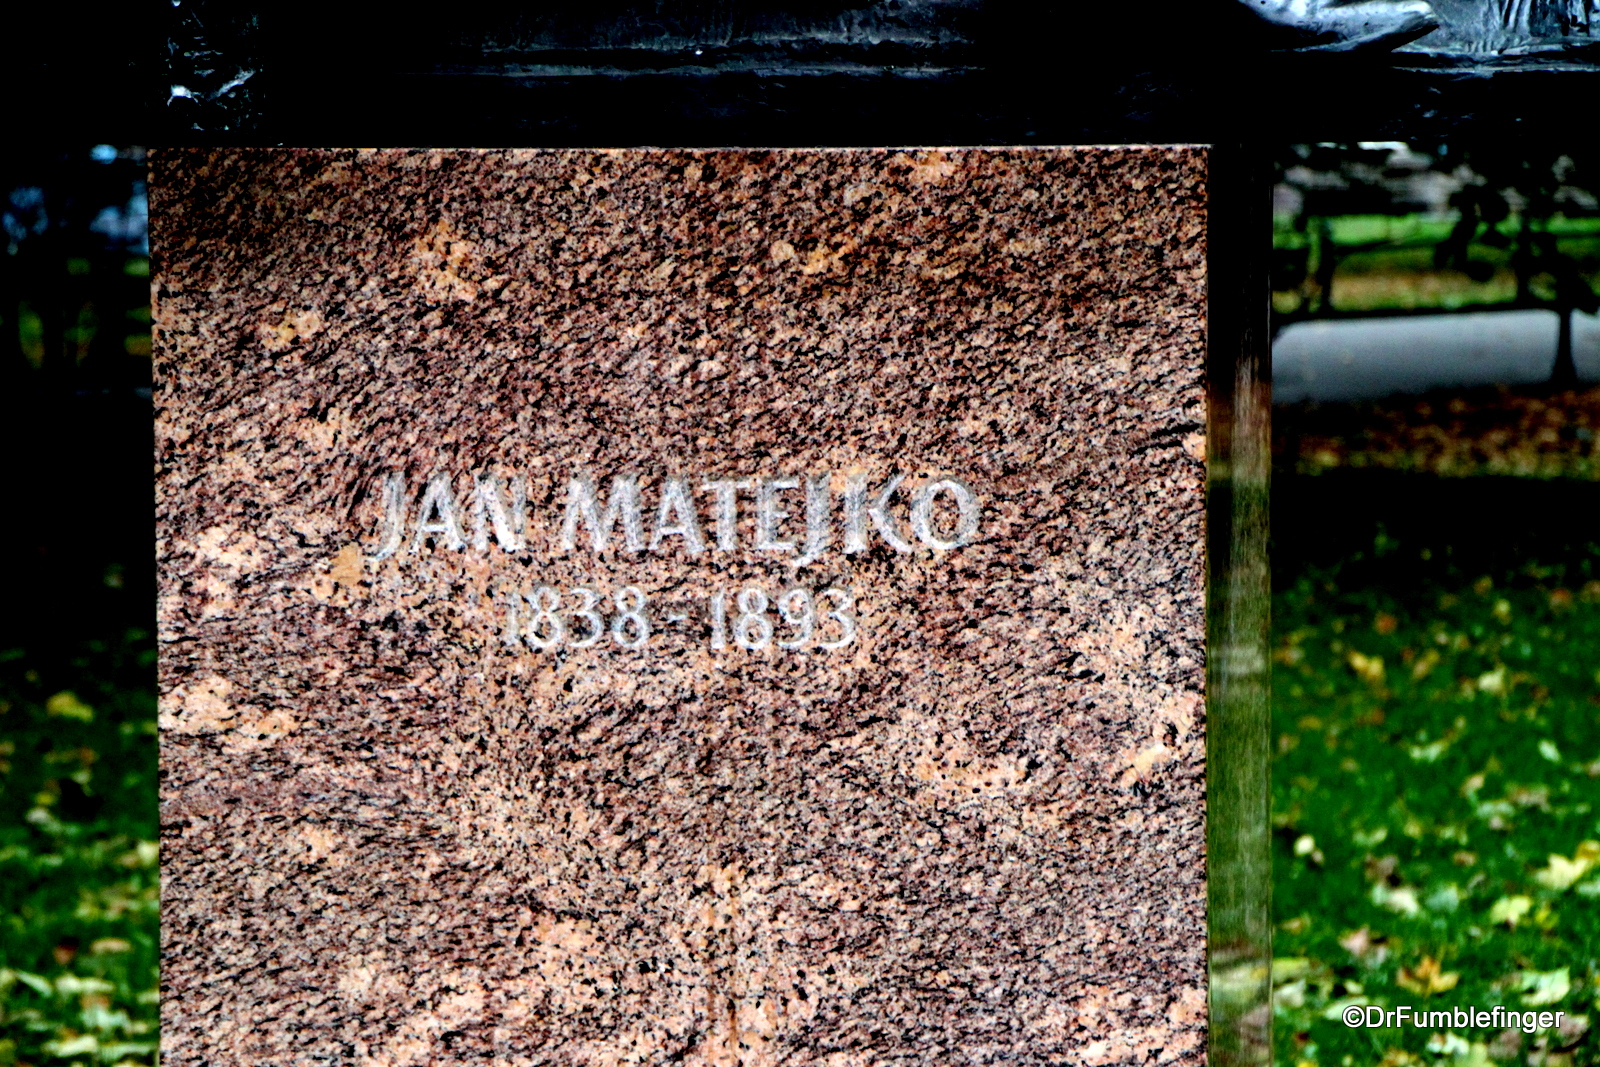 The Statue of Jan Matejko, Krakow